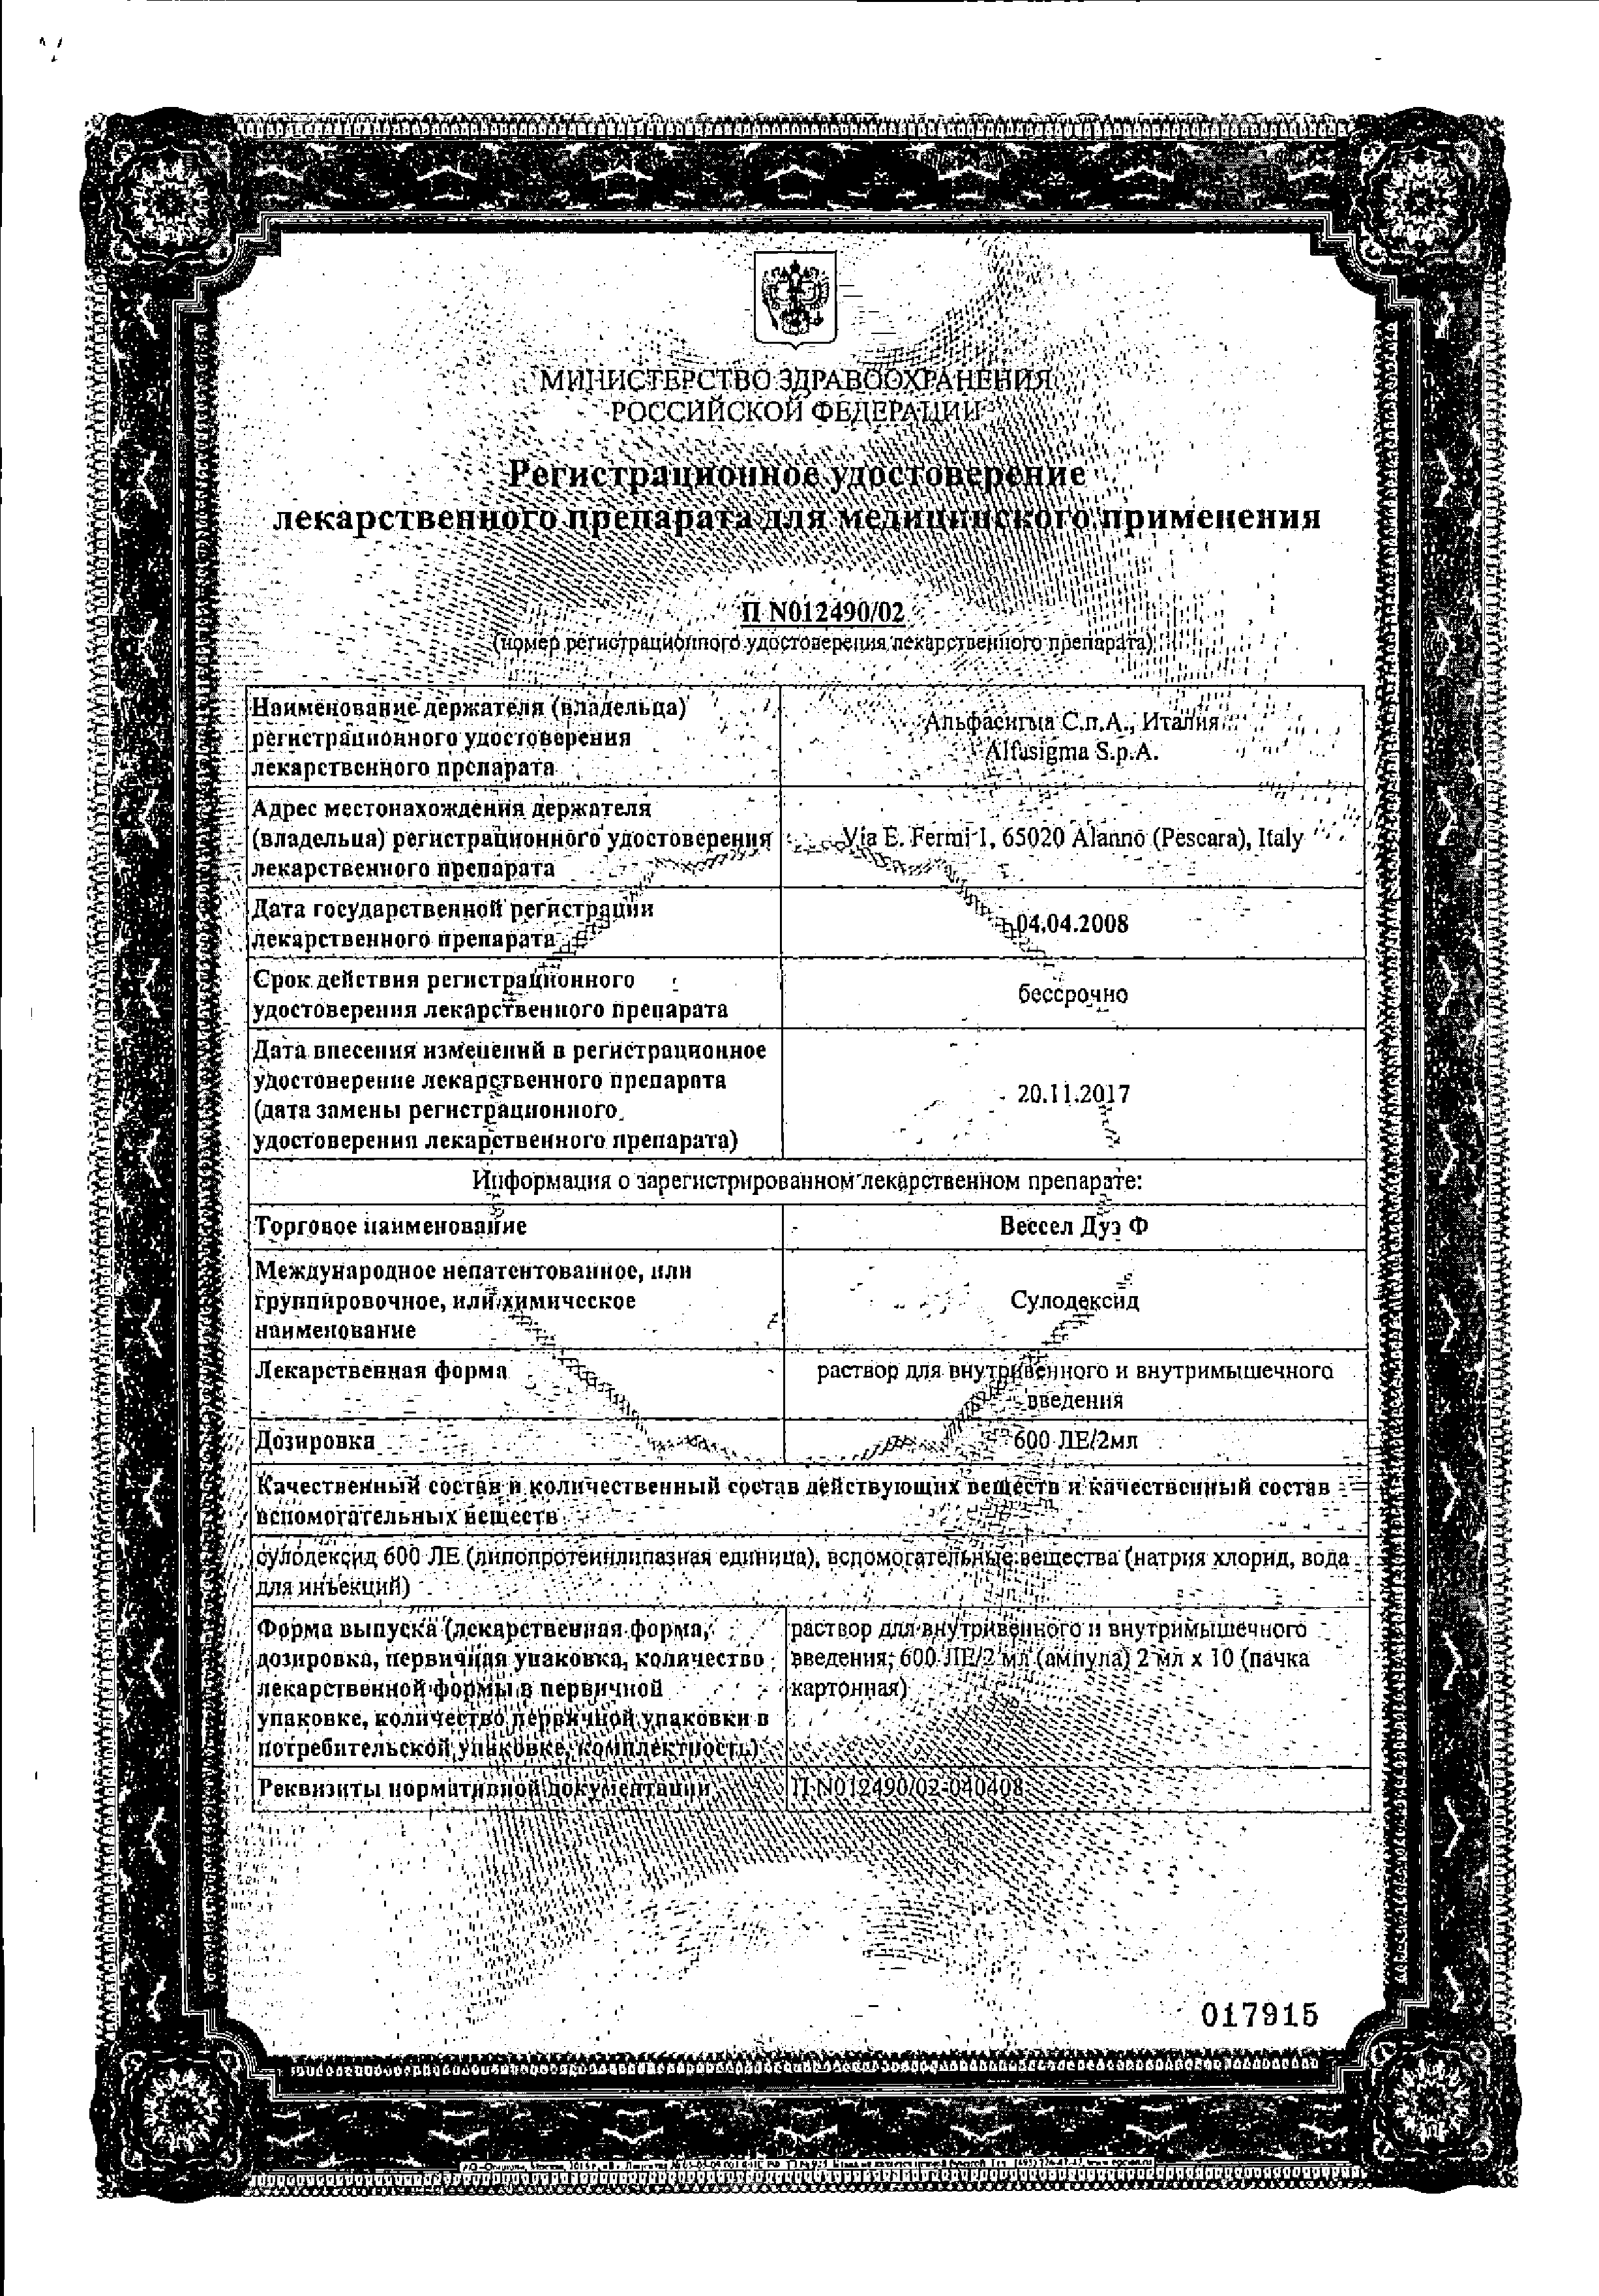 Вессел Дуэ Ф сертификат